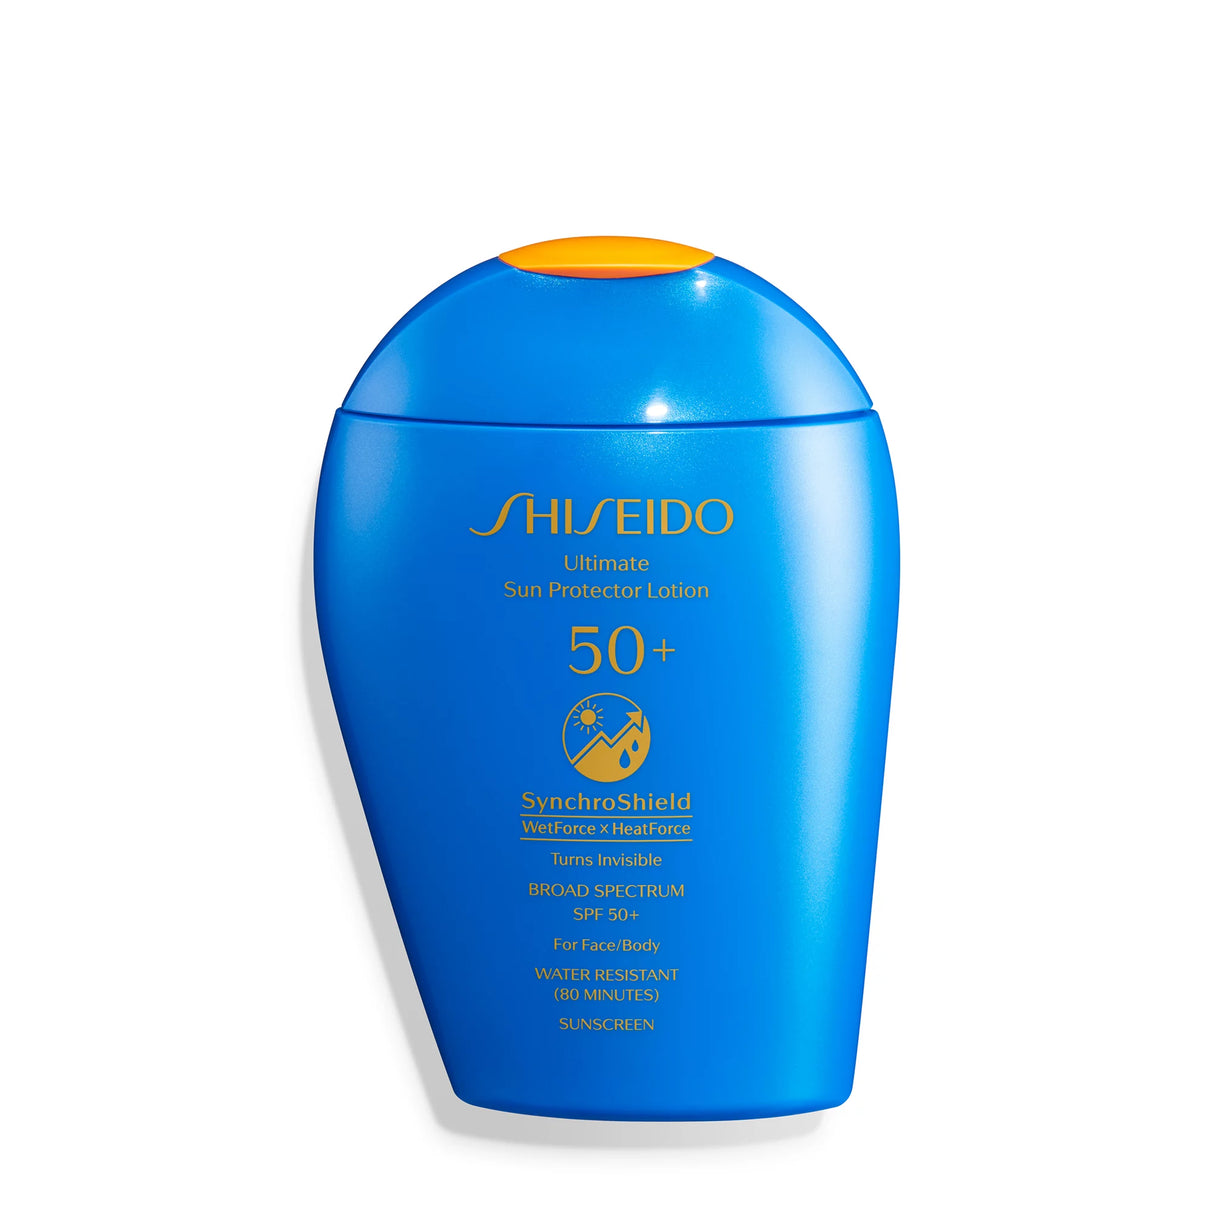 Shiseido Ultimate Sun Protector Lotion SPF 50+ Sunscreen (5 fl. oz.)